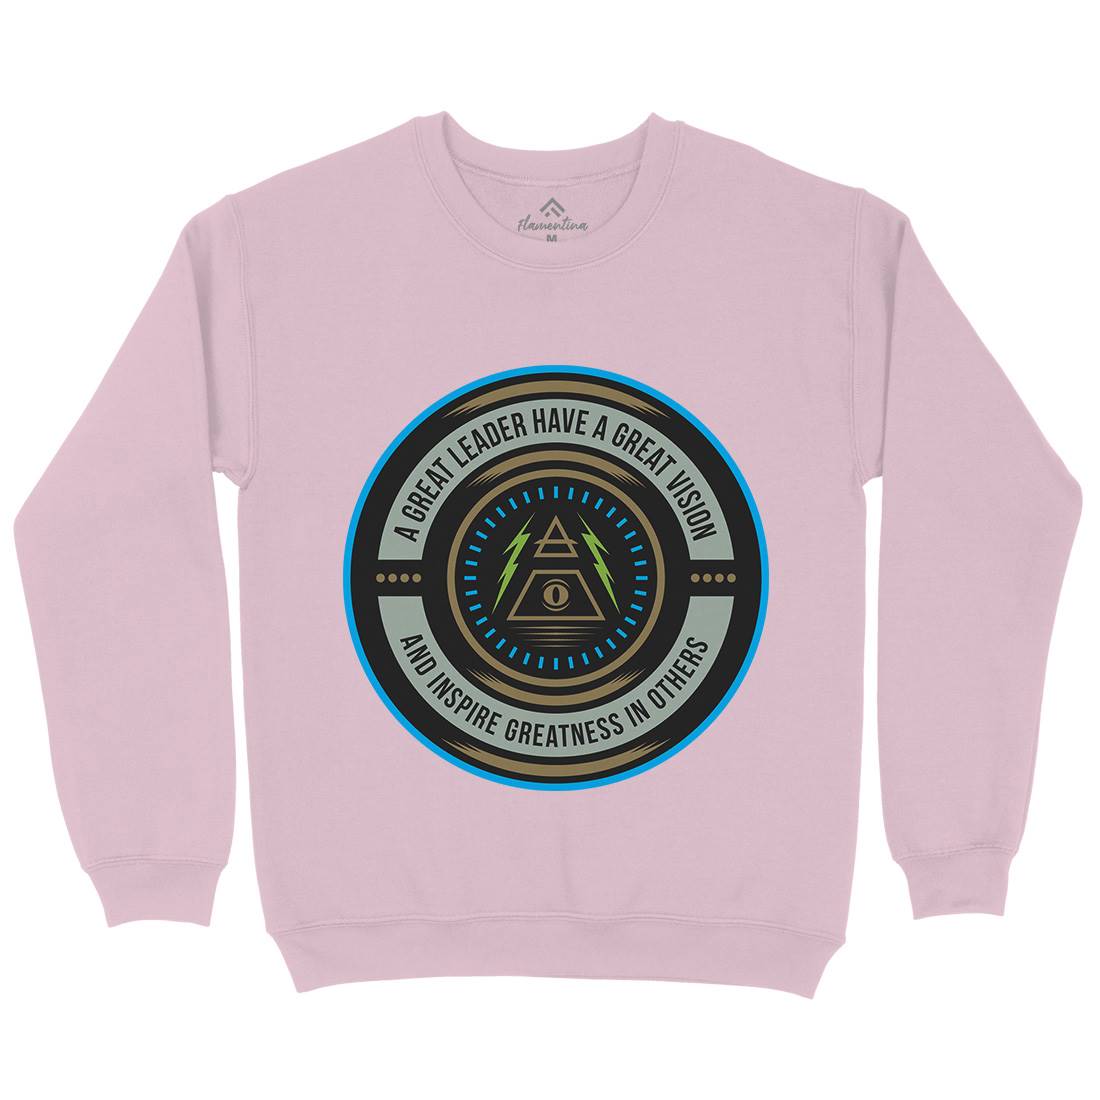 Great Vision Kids Crew Neck Sweatshirt Illuminati A323